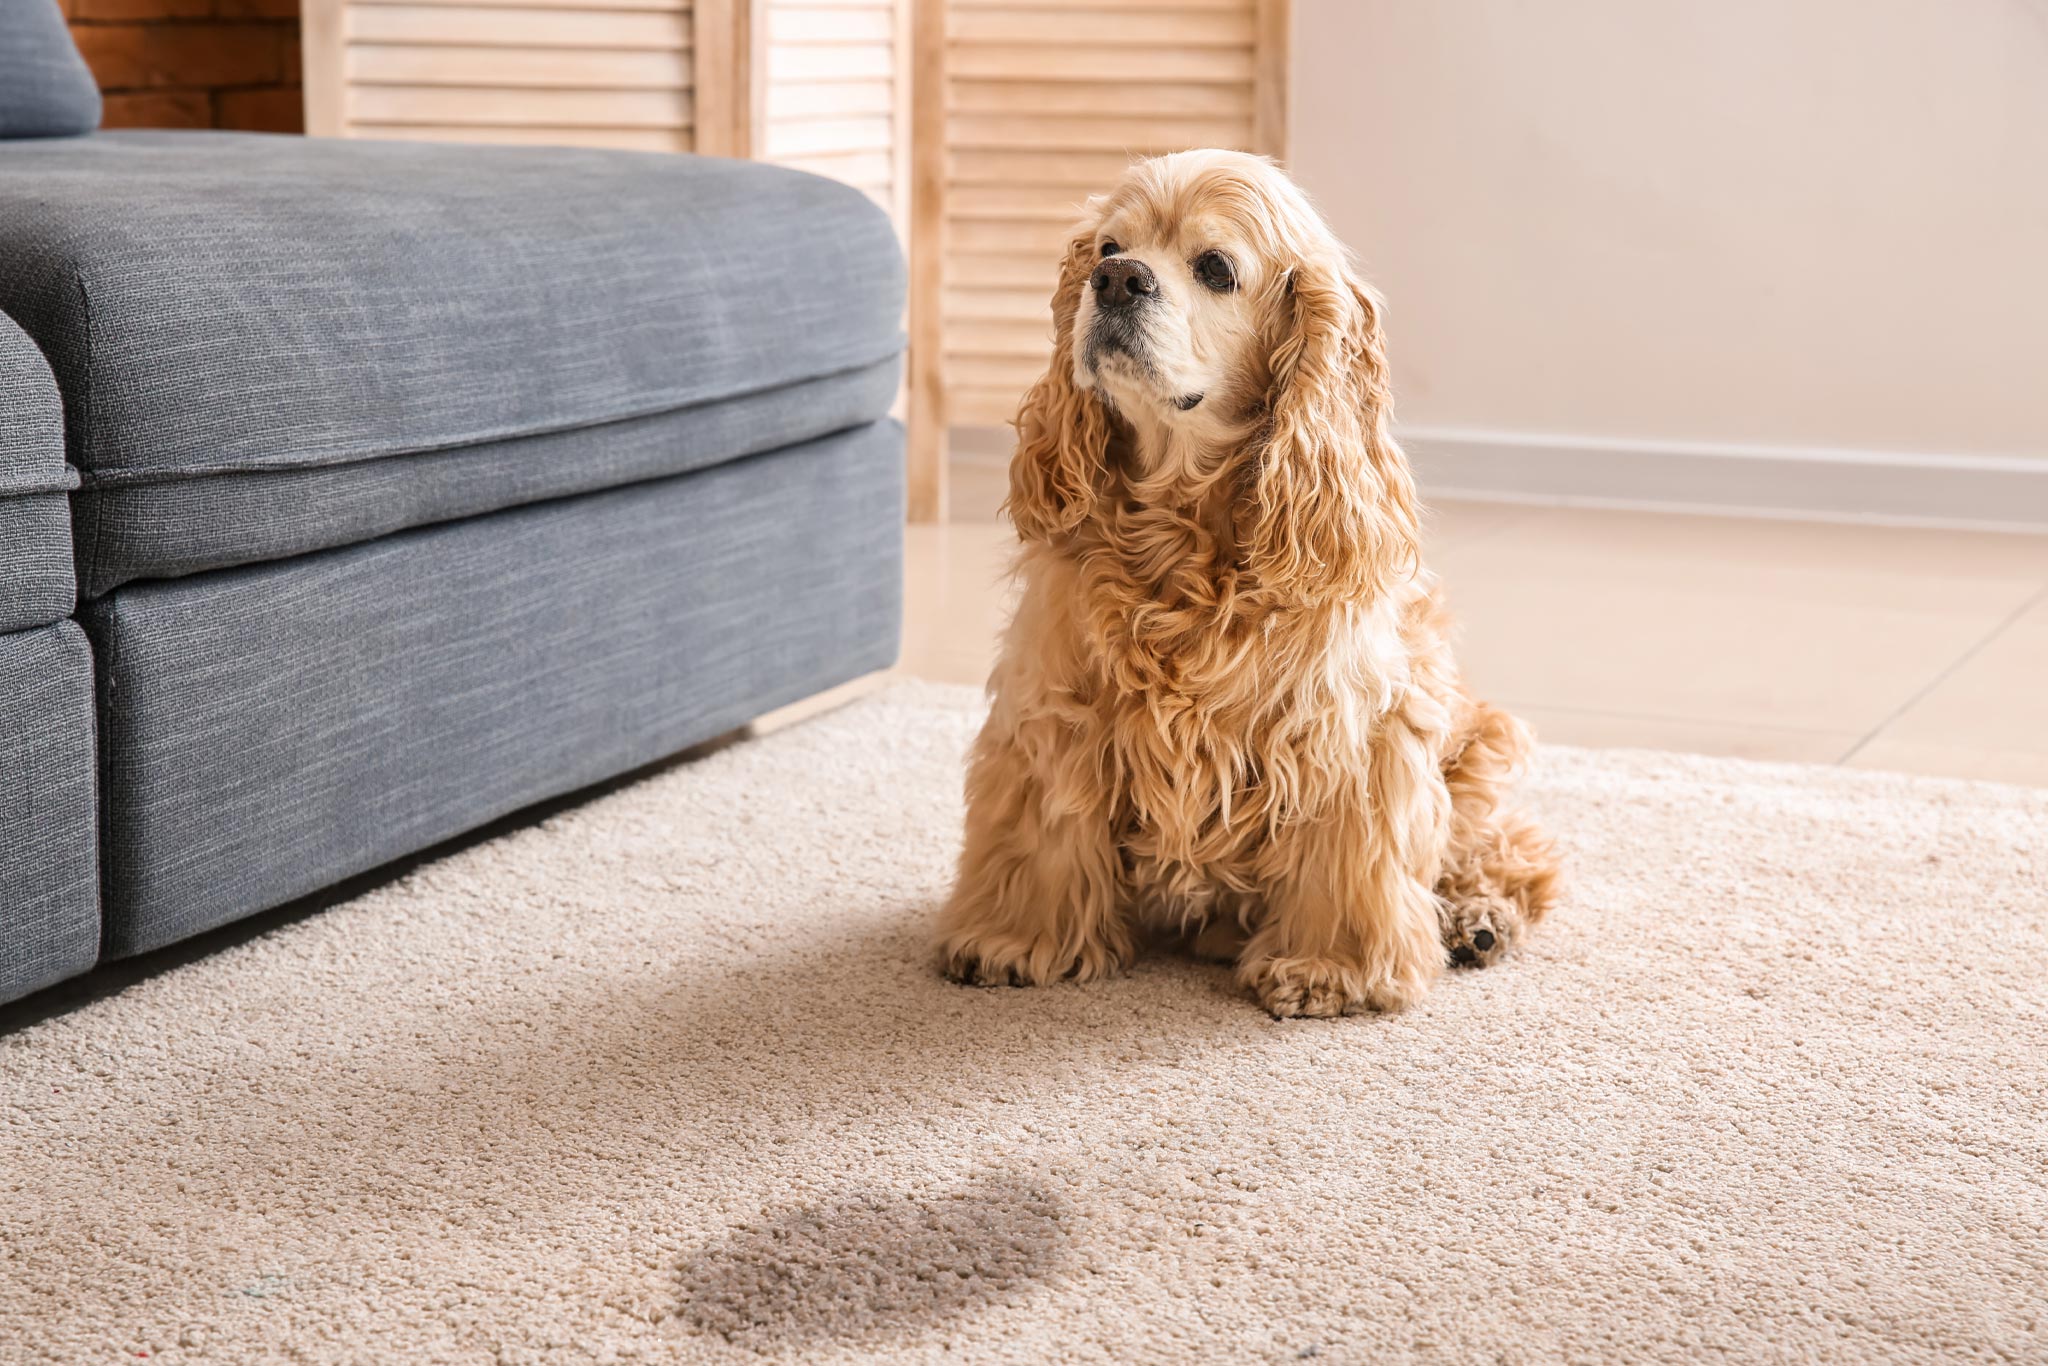 spaniel dog sitting next to pee spot on carpet